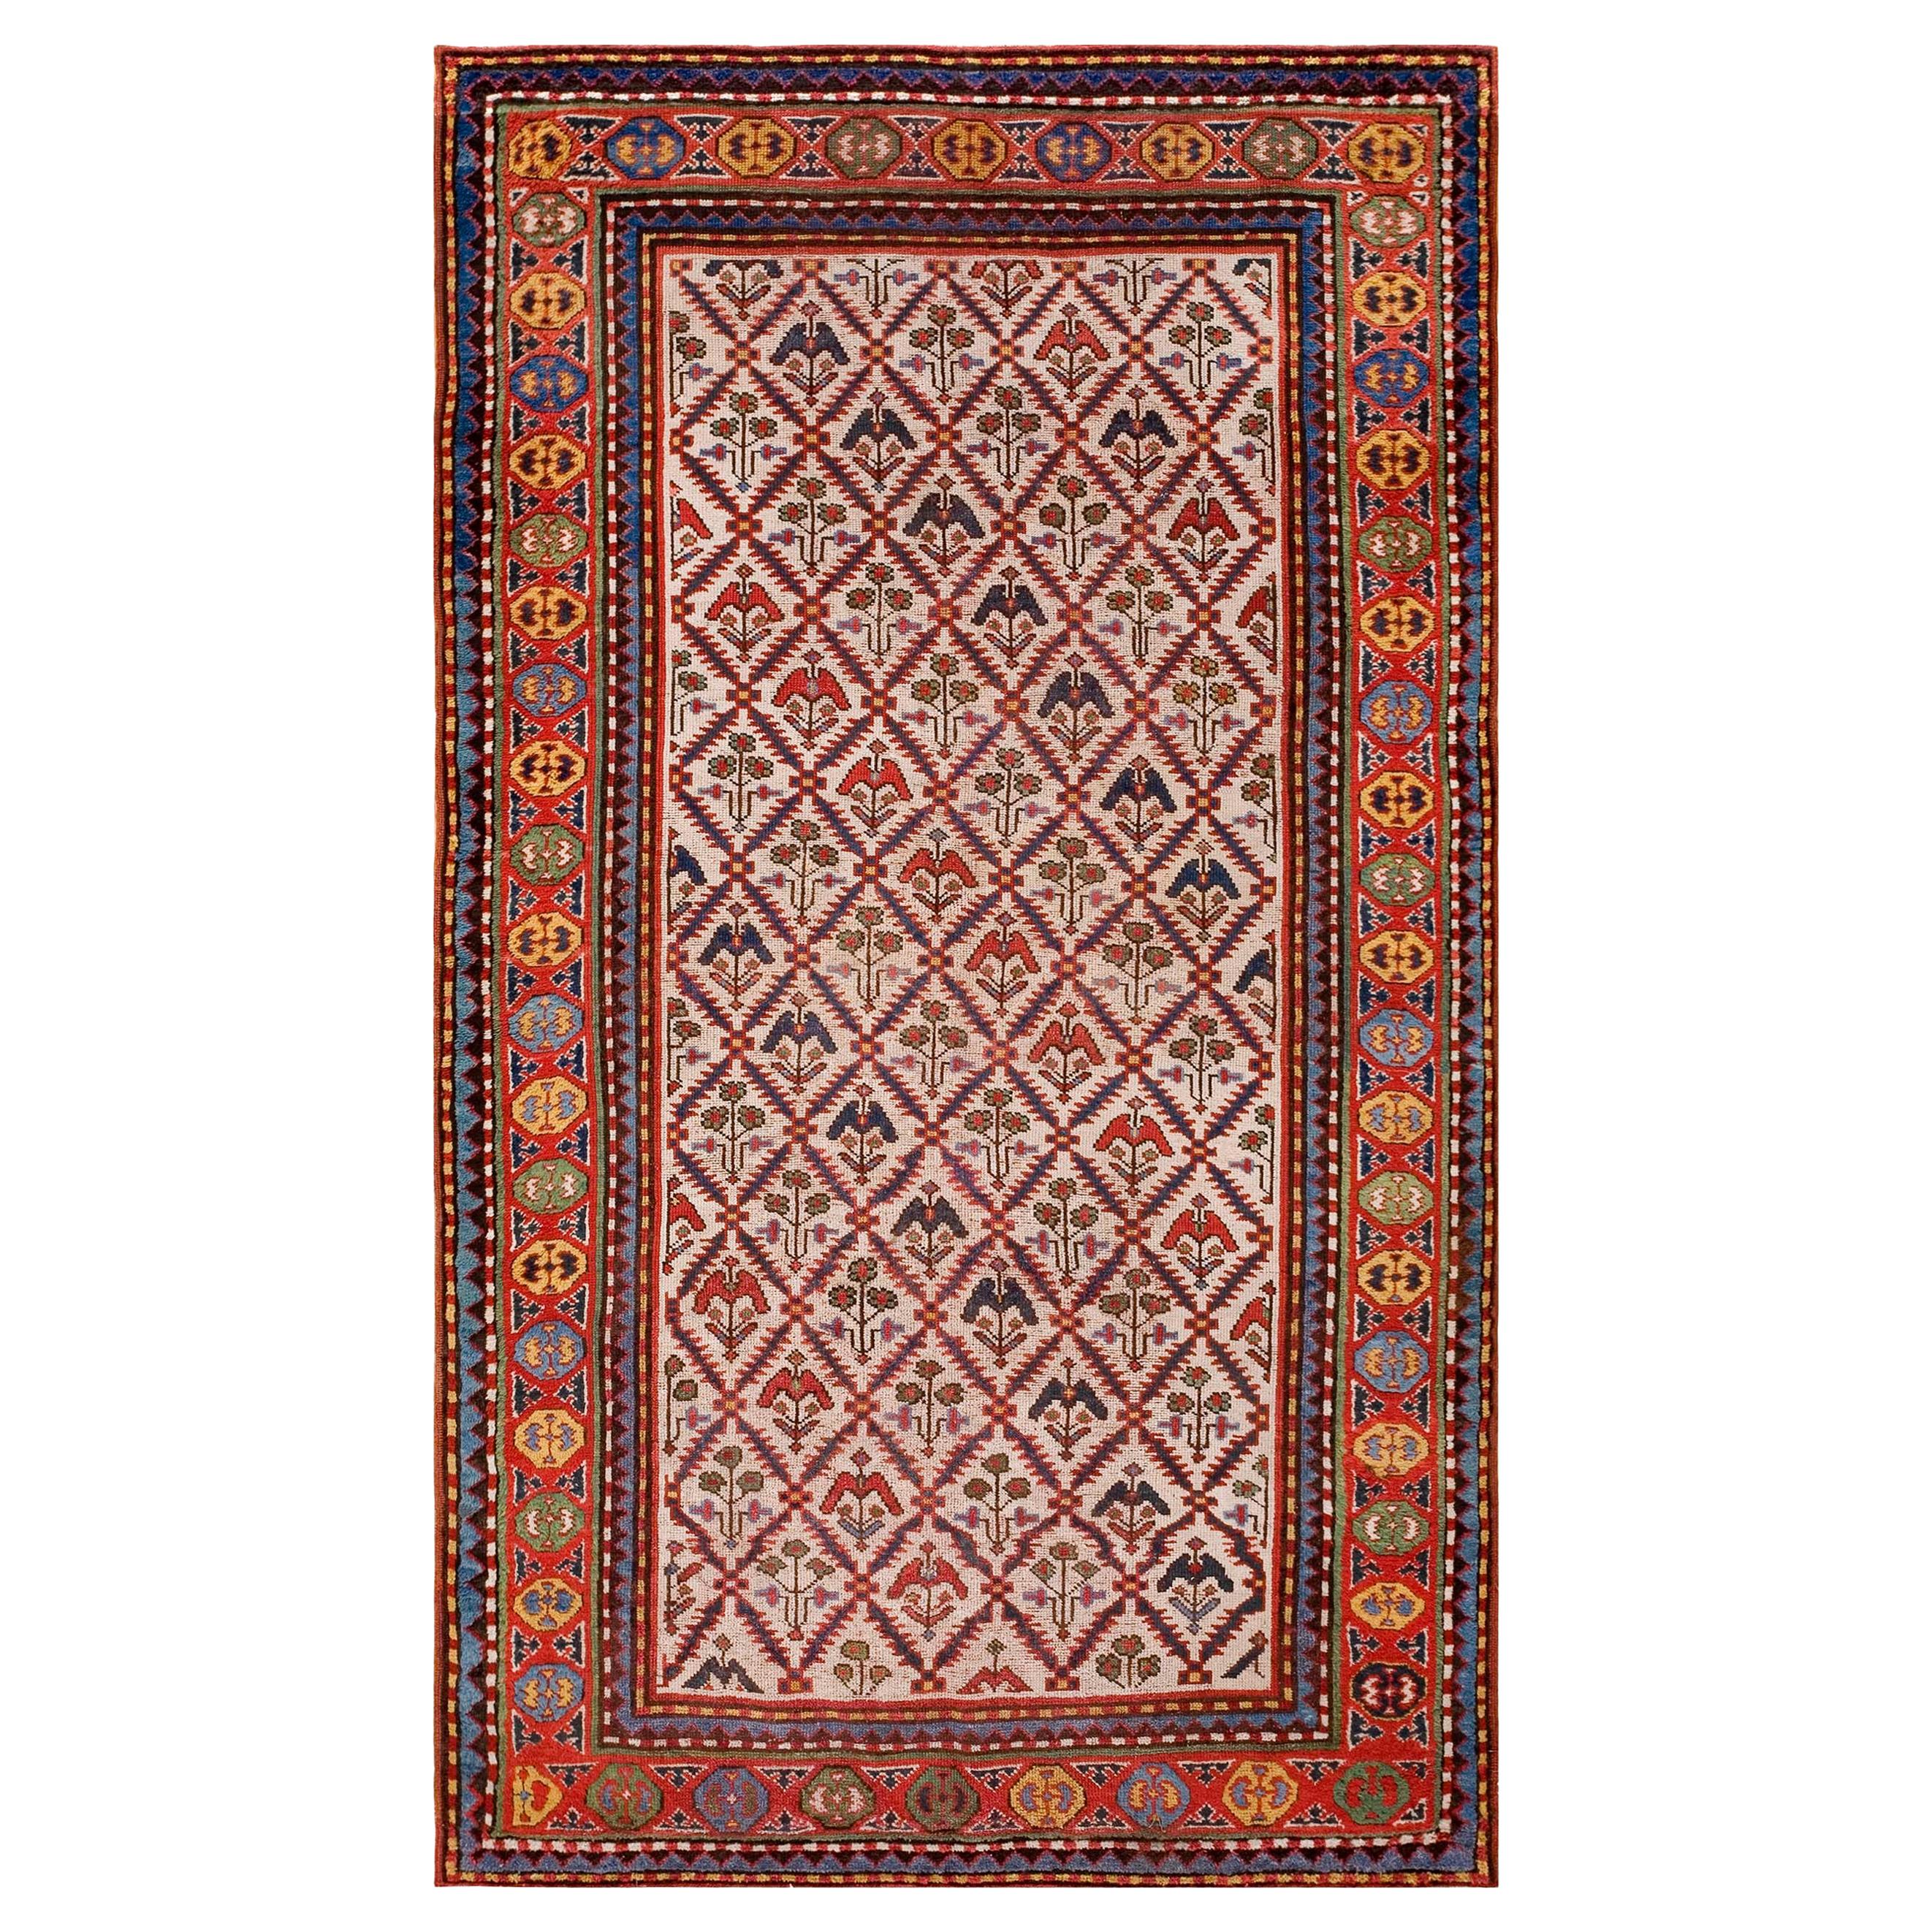 Late 19th Century Caucasian Kazak Carpet ( 4'8" X 8' - 142 x 244 )